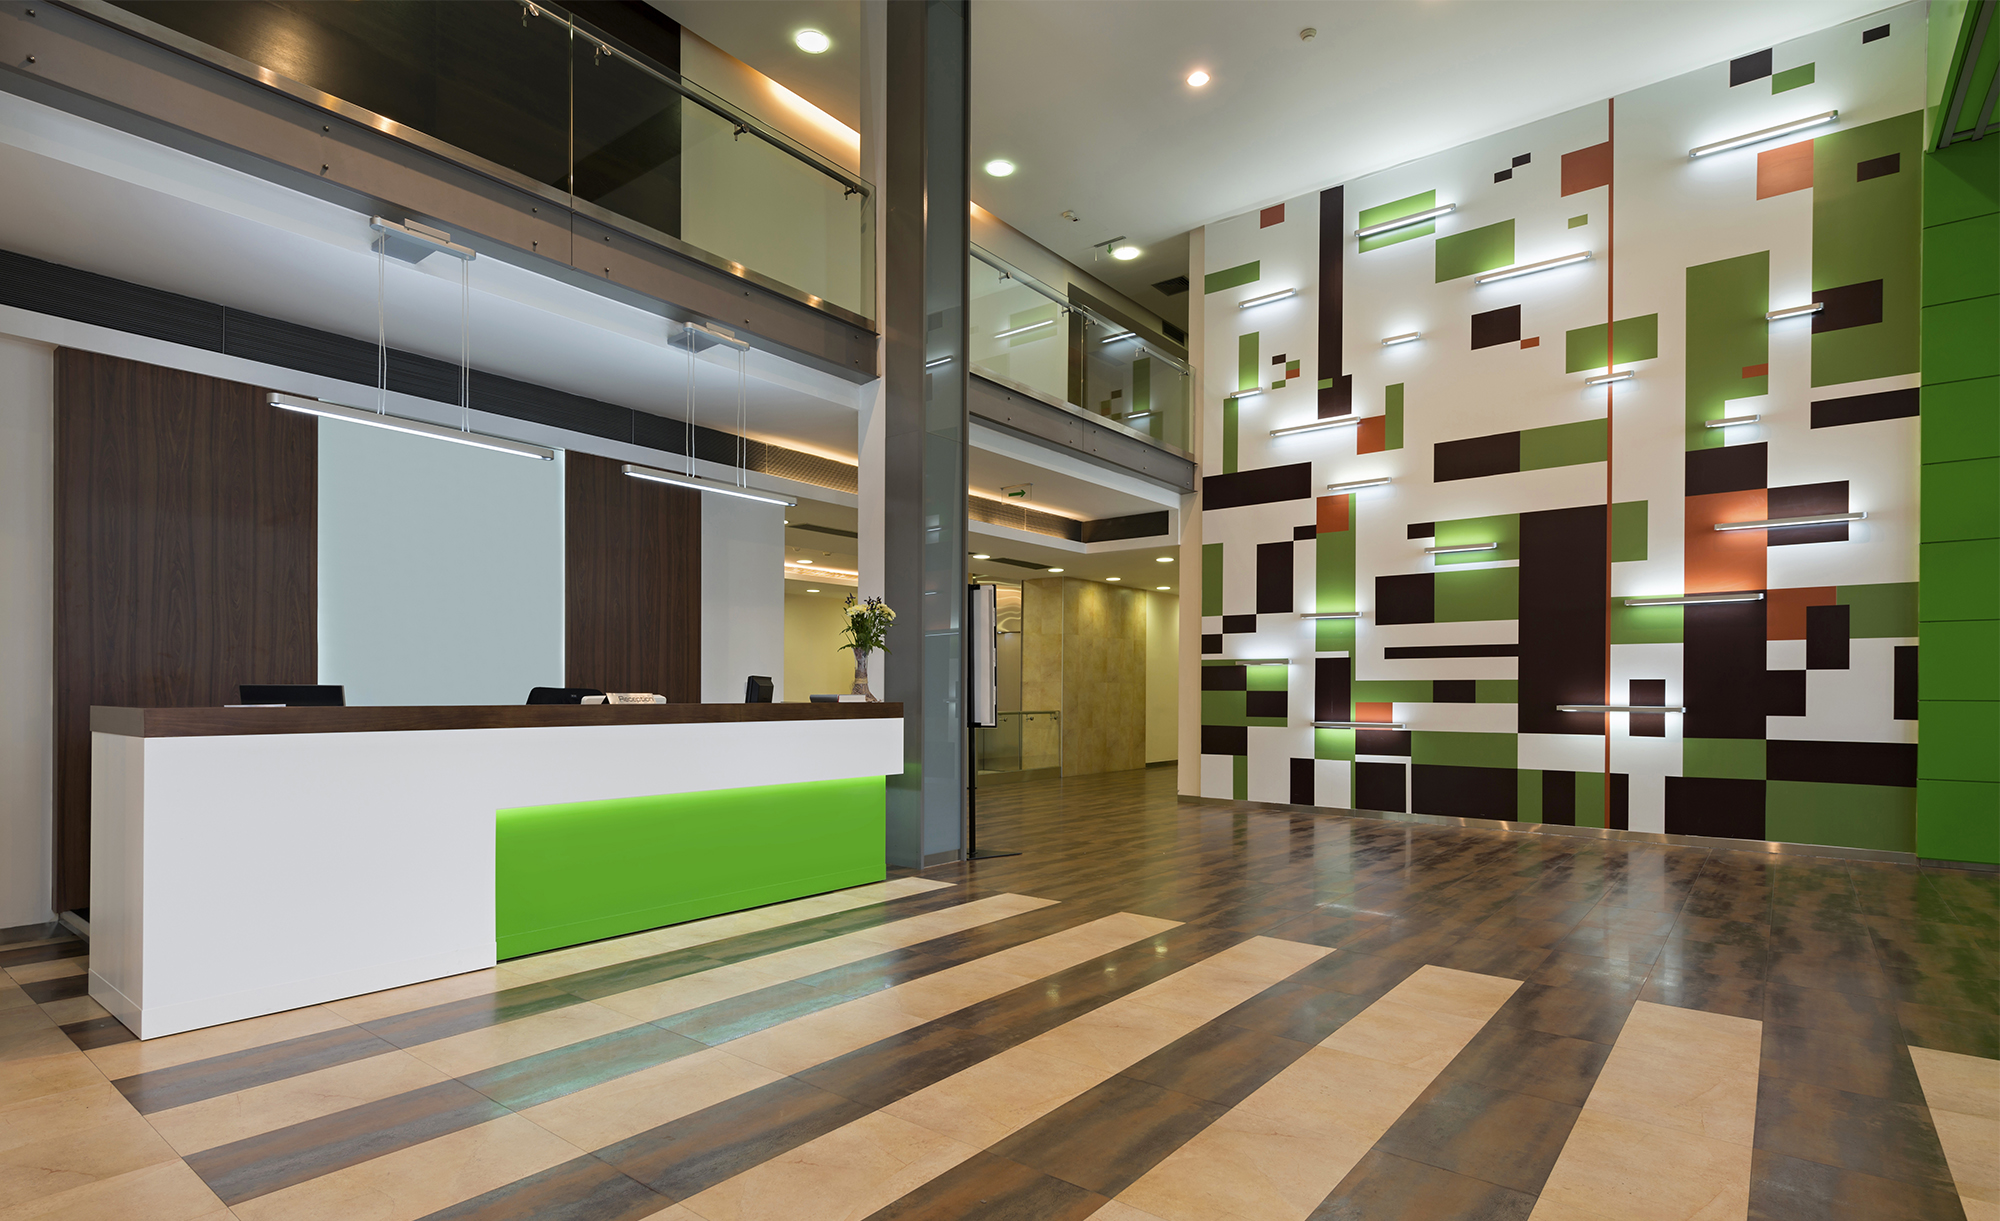 Company lobby with custom painted walls